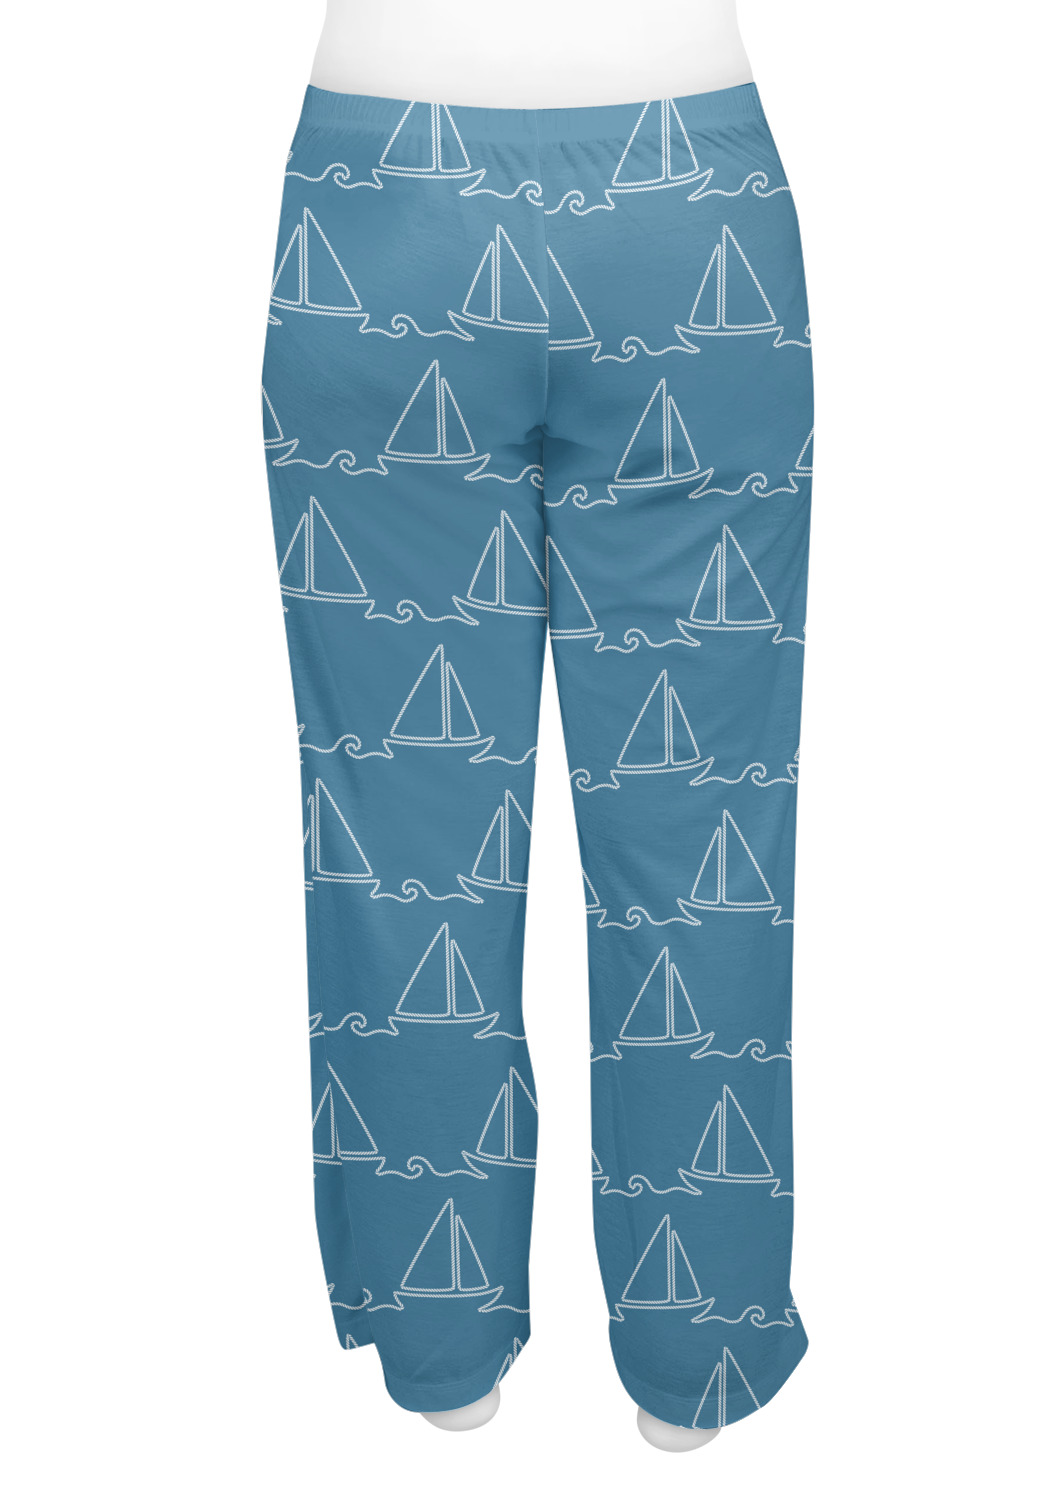 Rope Sail Boats Womens Pajama Pants (Personalized) - YouCustomizeIt